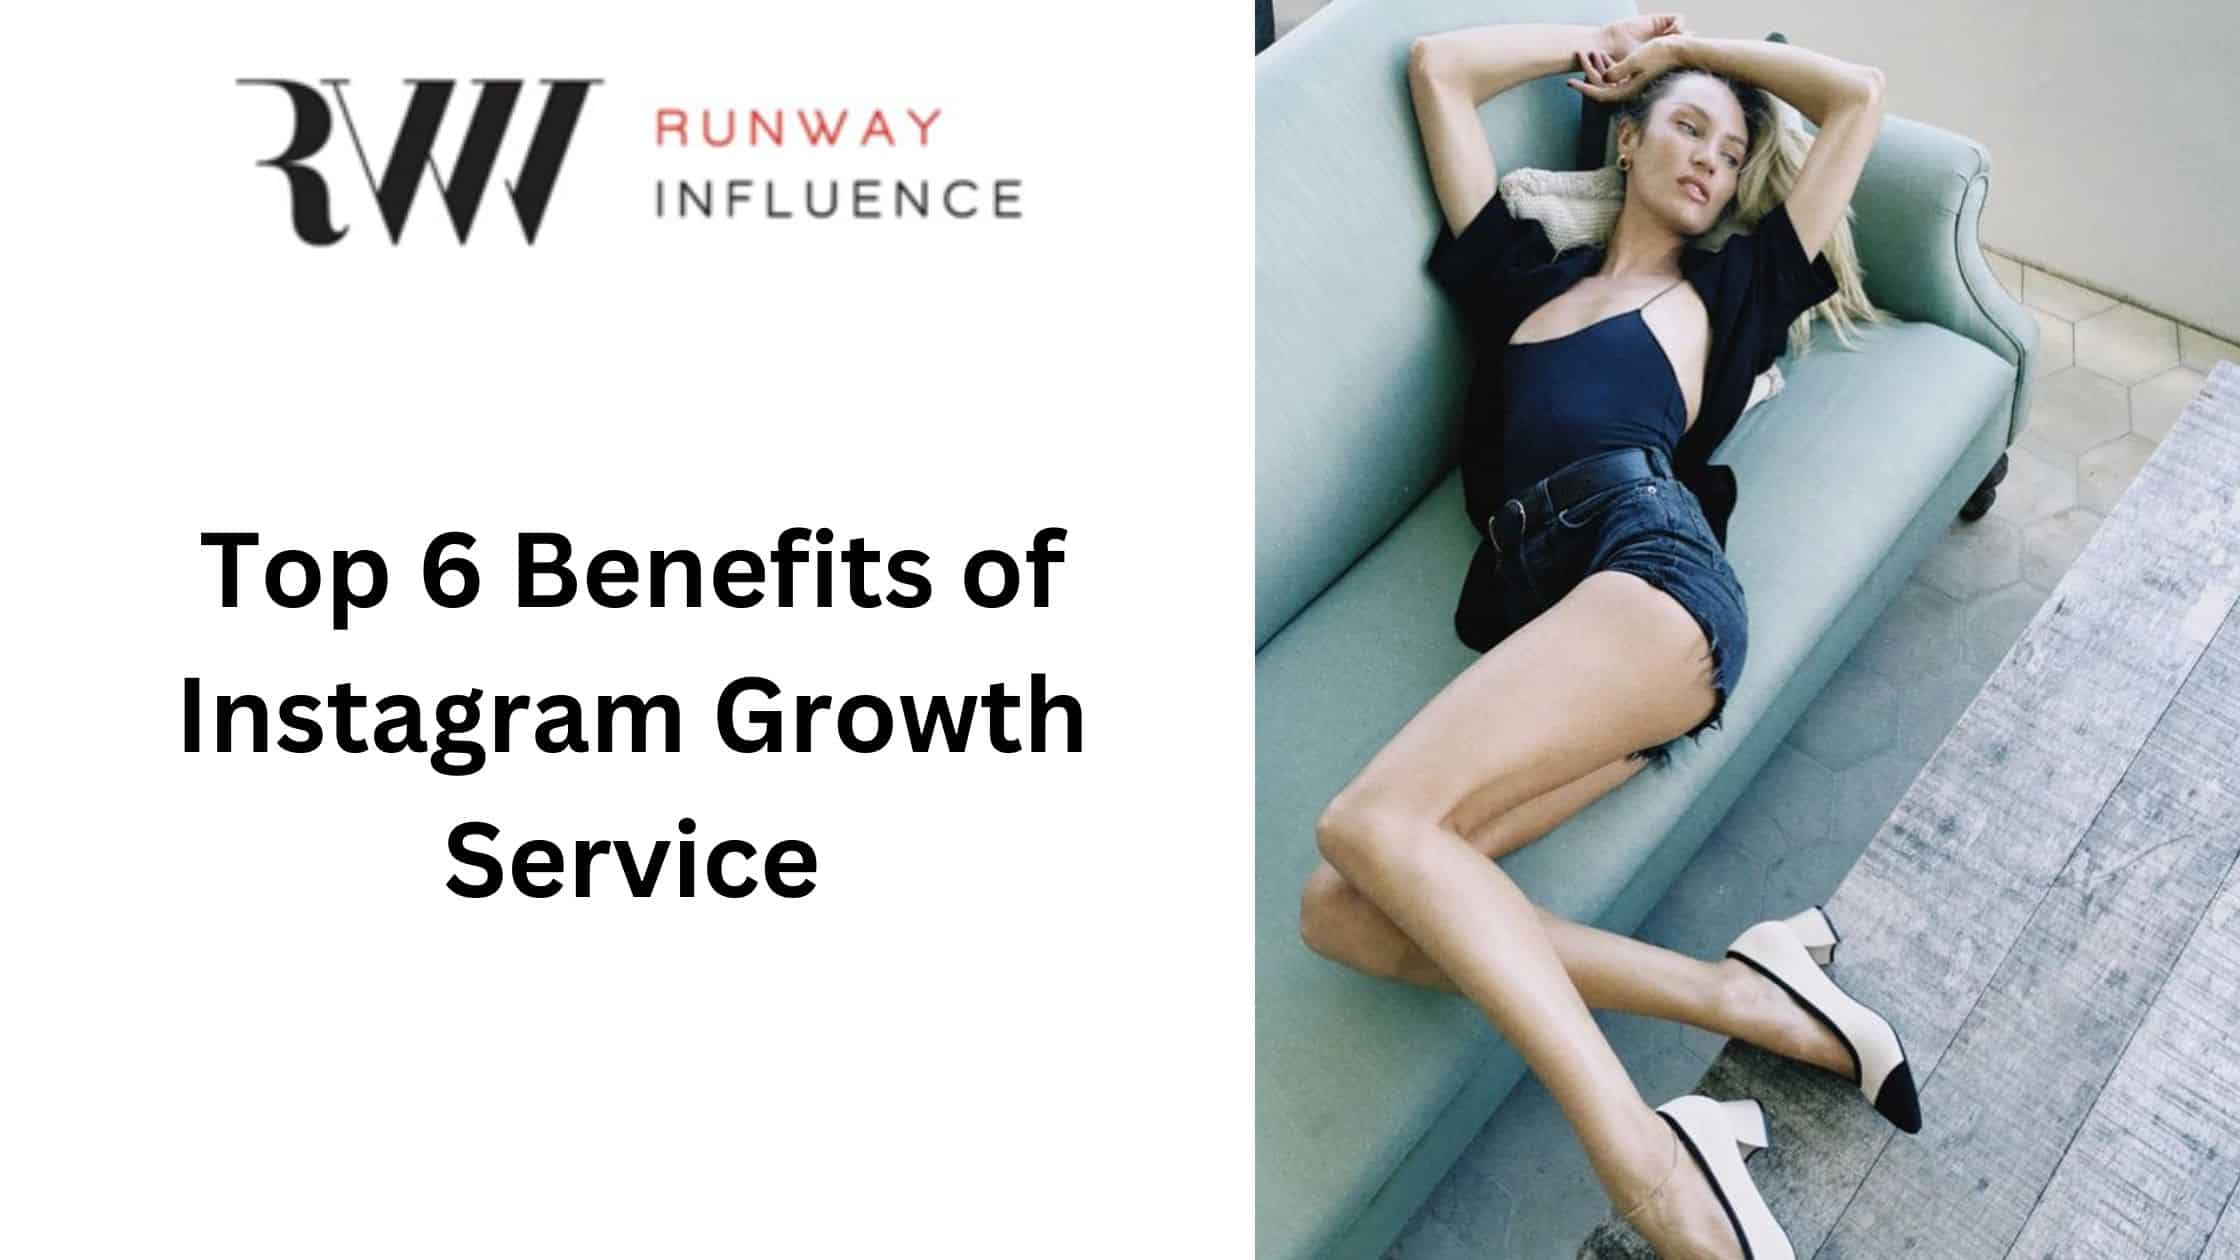 Top 6 Benefits of Instagram Growth Service